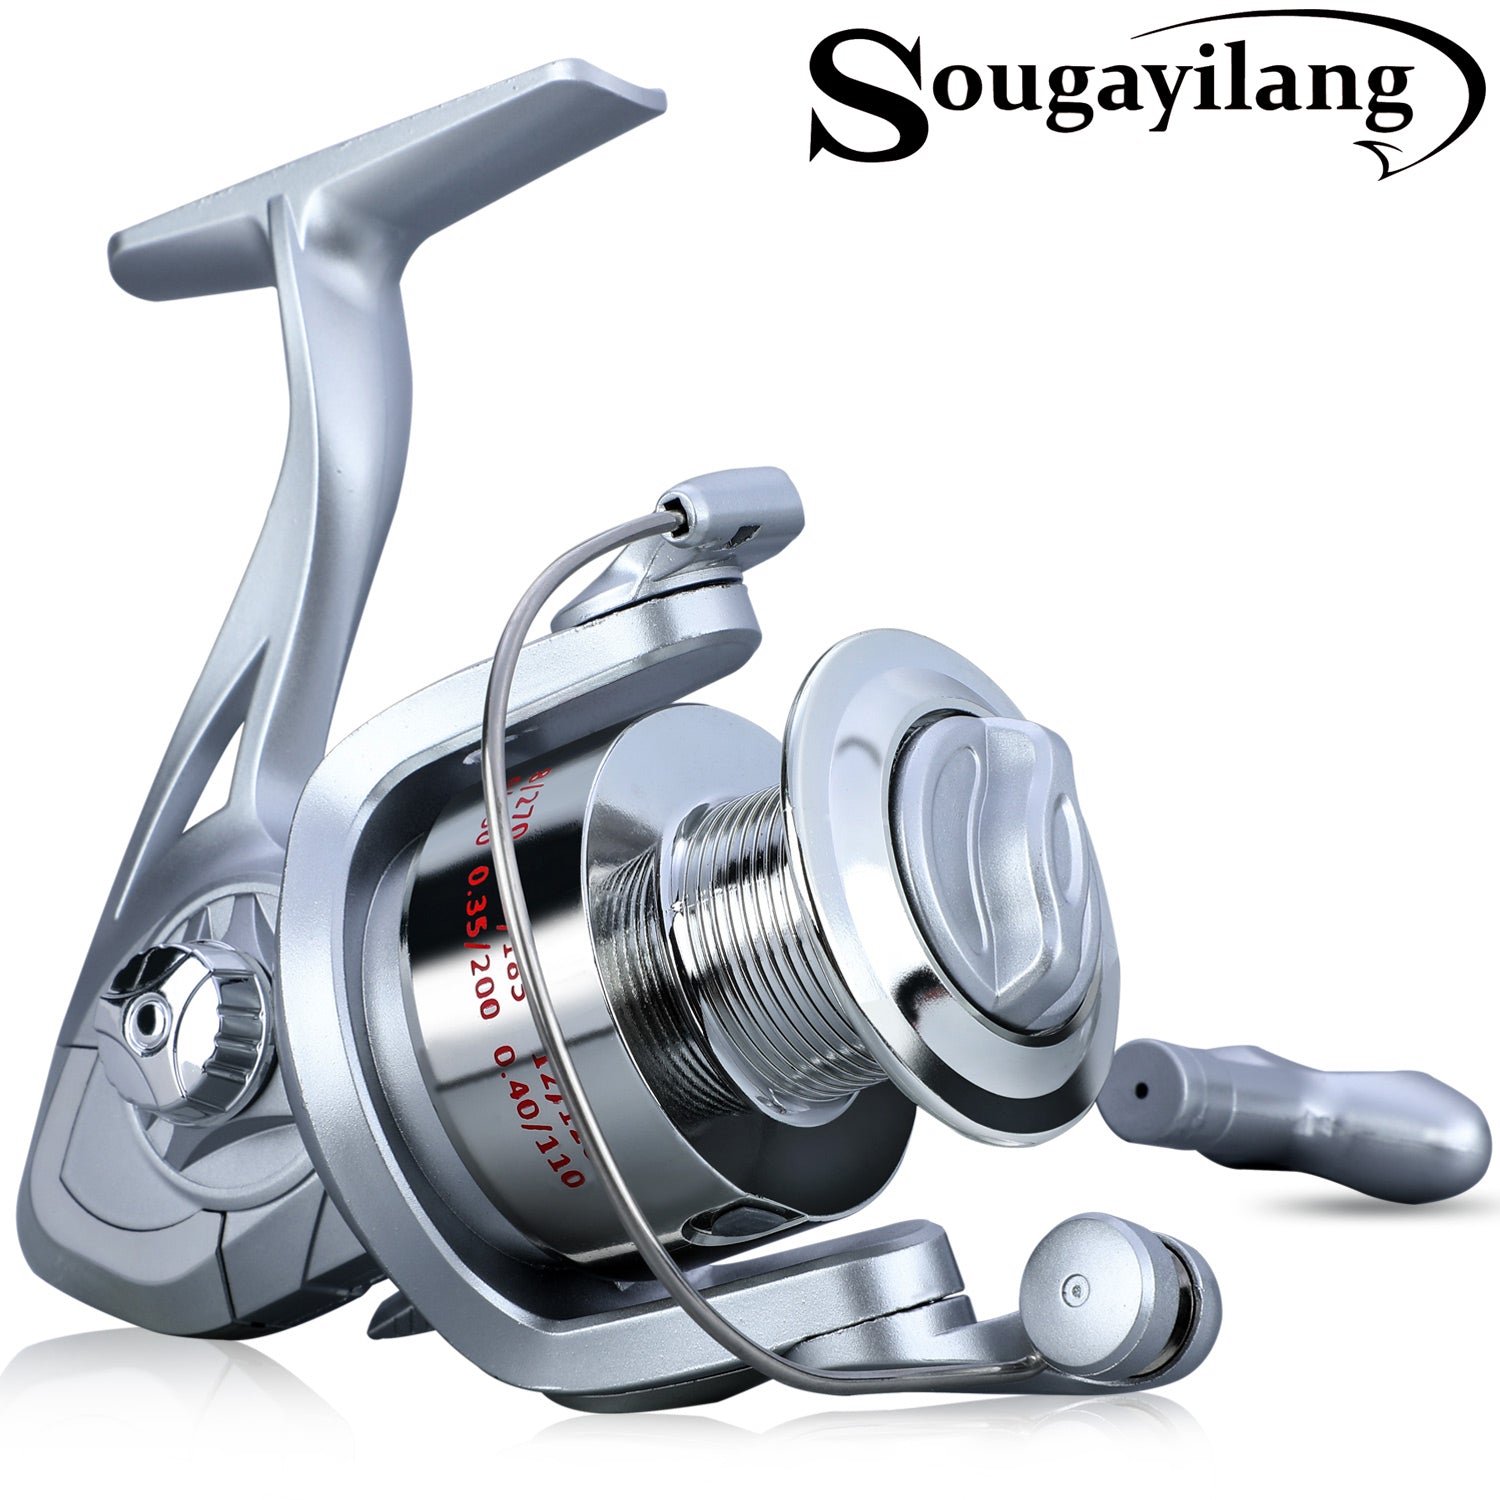 Sougayilang 1000-3000 Fishing Reels Speed 5.2:1 Gear Ratio Right/Left